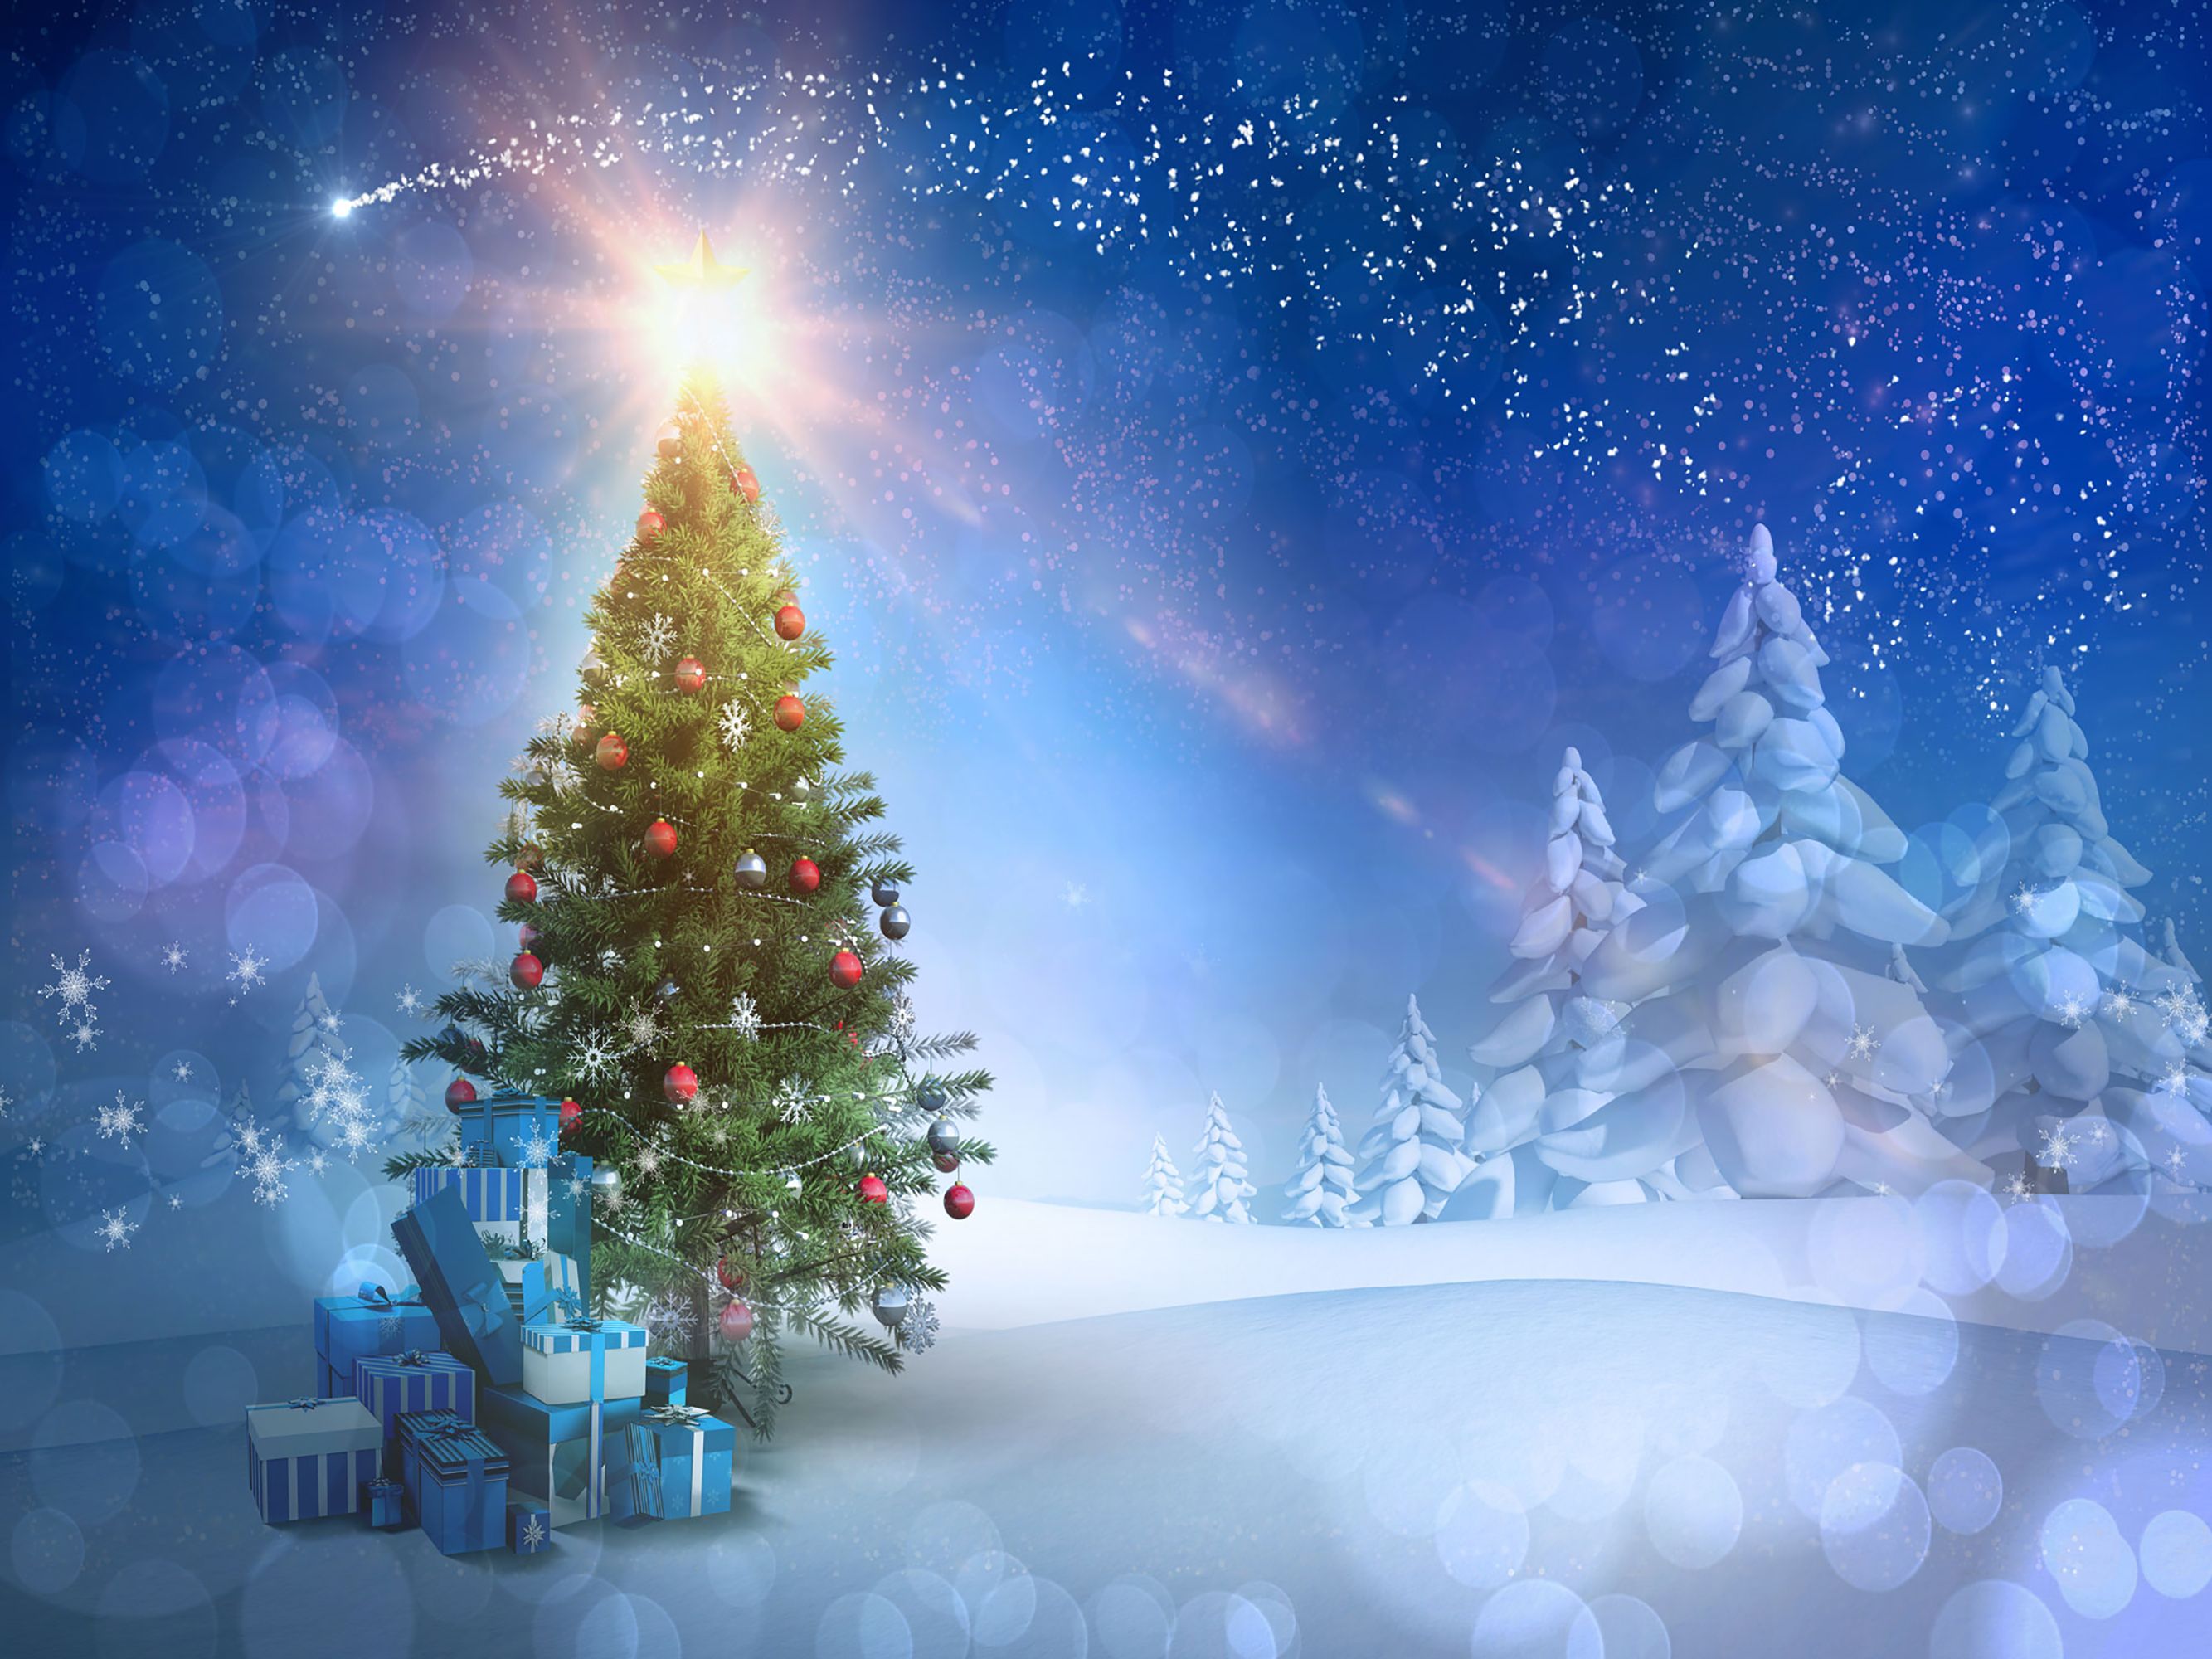 2019 Christmas Tree Gift Box Snow Vinyl Photography Backdrops Winter